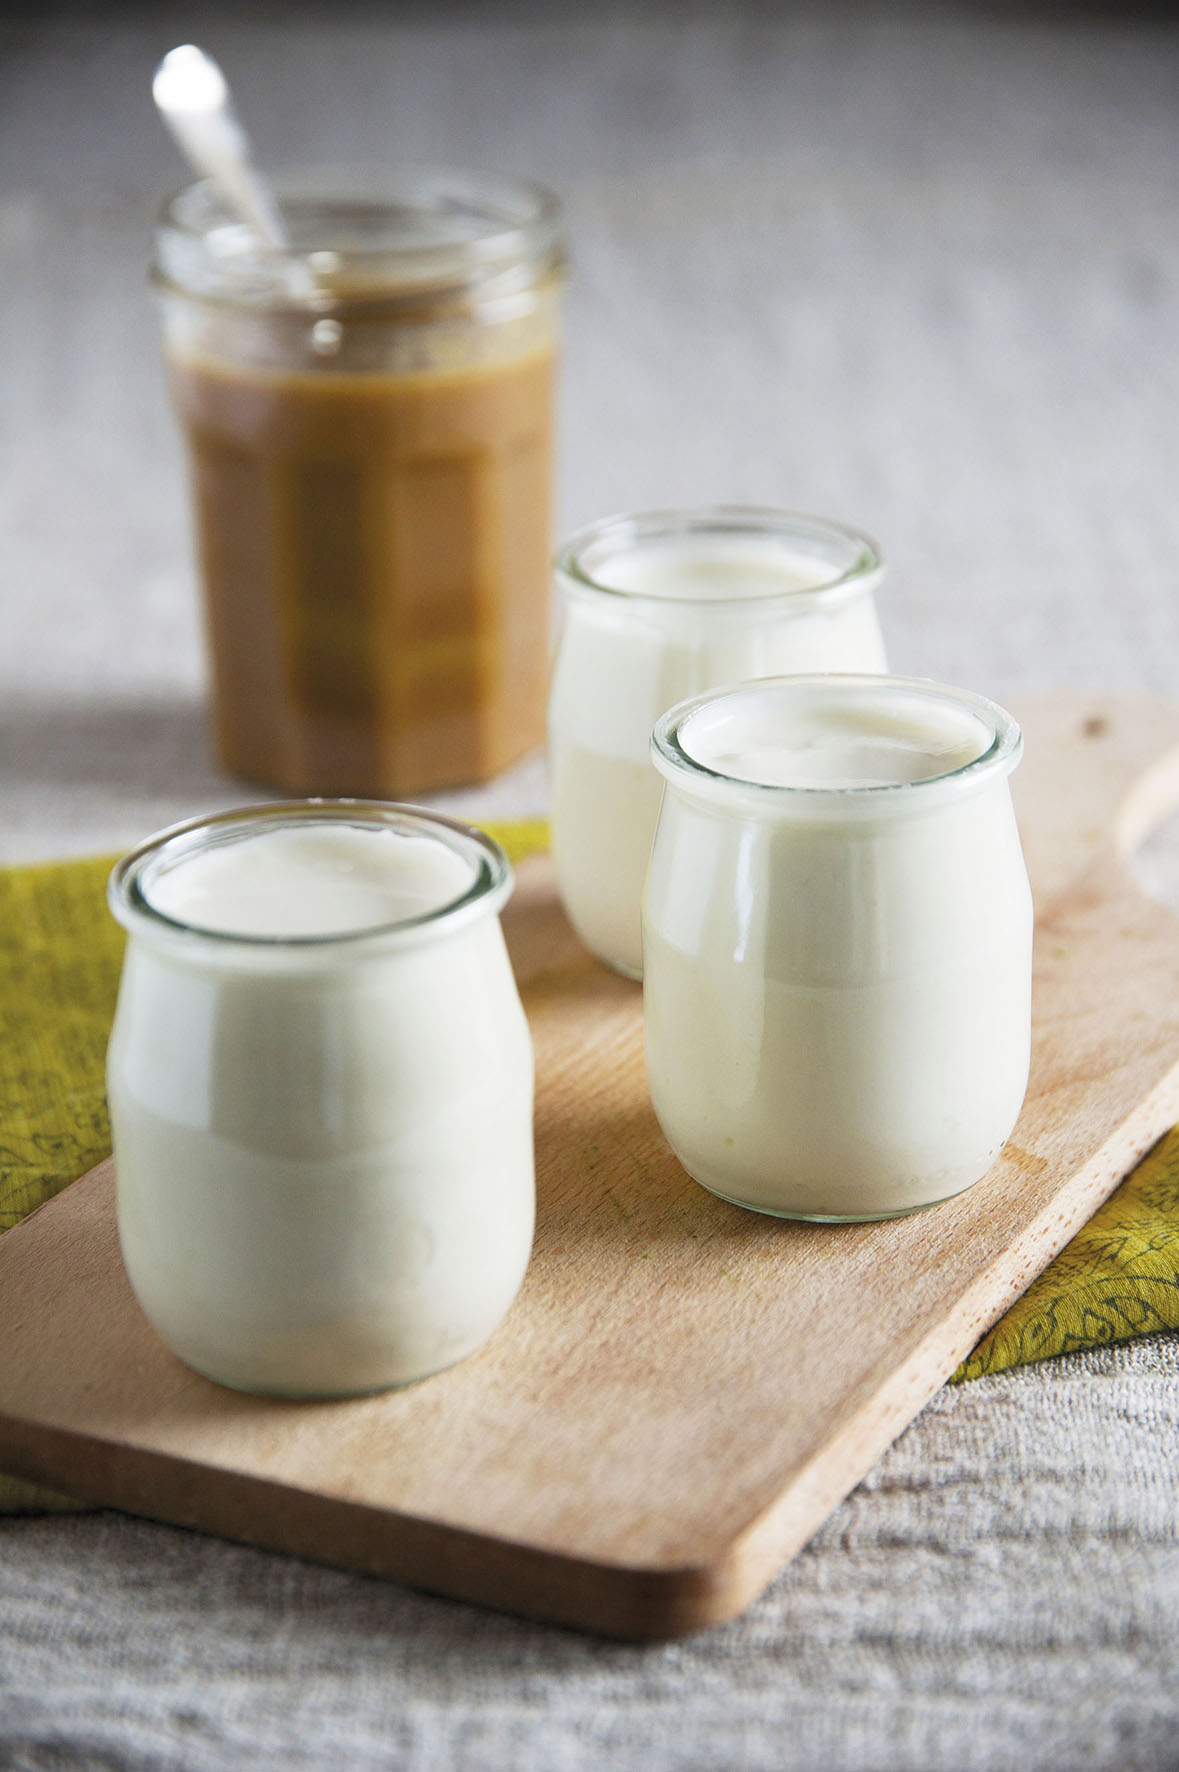 SITRAM recipe for homemade yogurt in the pressure cooker